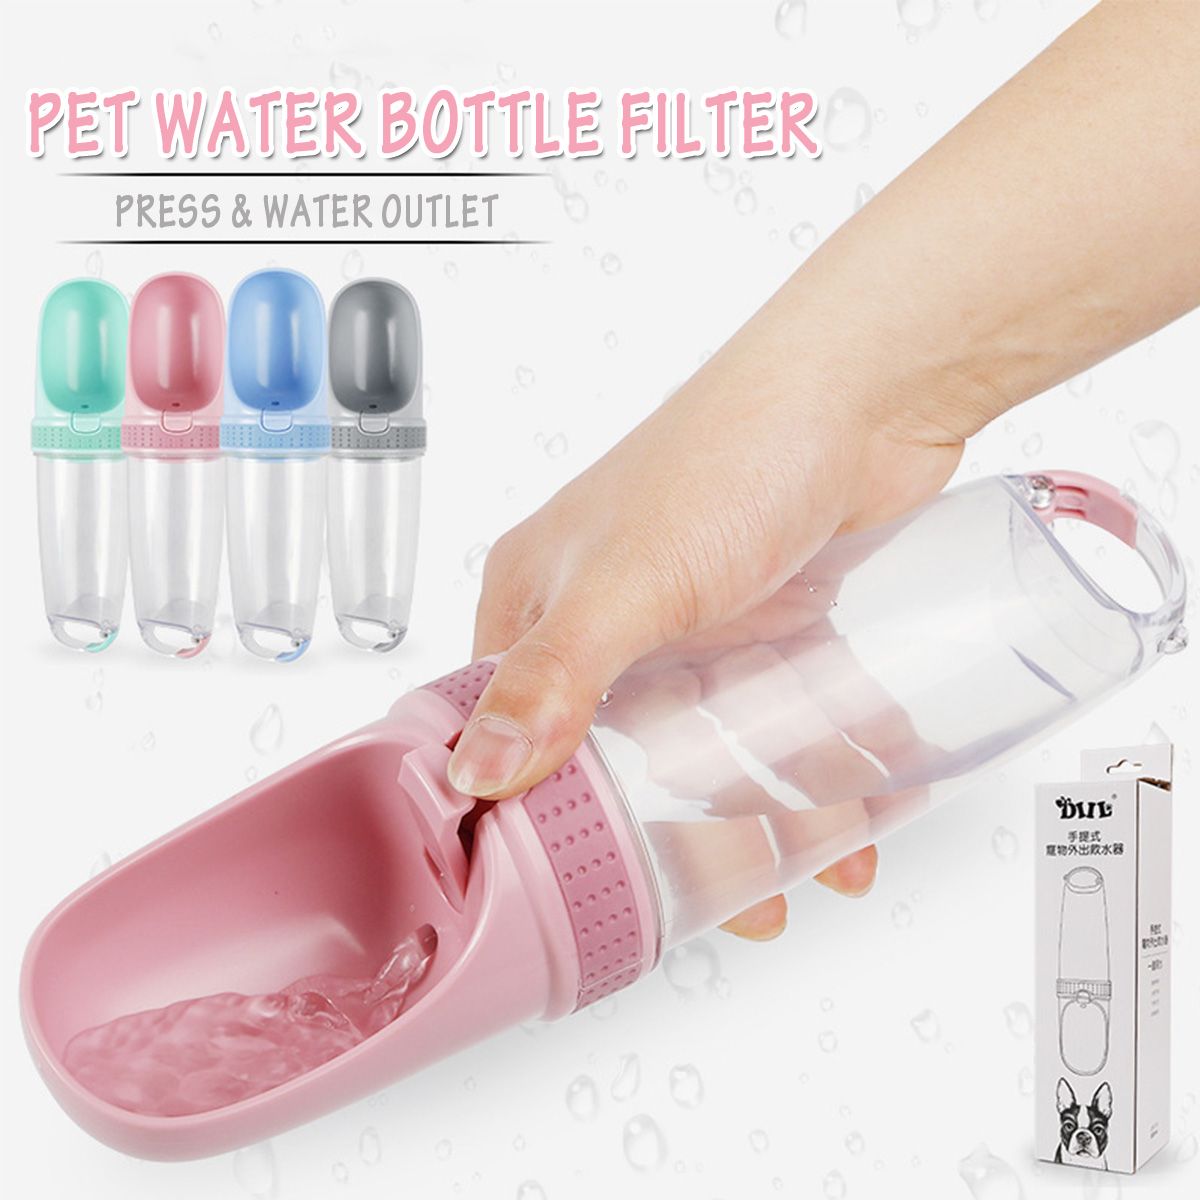 350ml-Portable-Dog-Cat-Pet-Water-Bottle-Cup-Travel-Pet-Drinking-Dispenser-Feeder-1534106